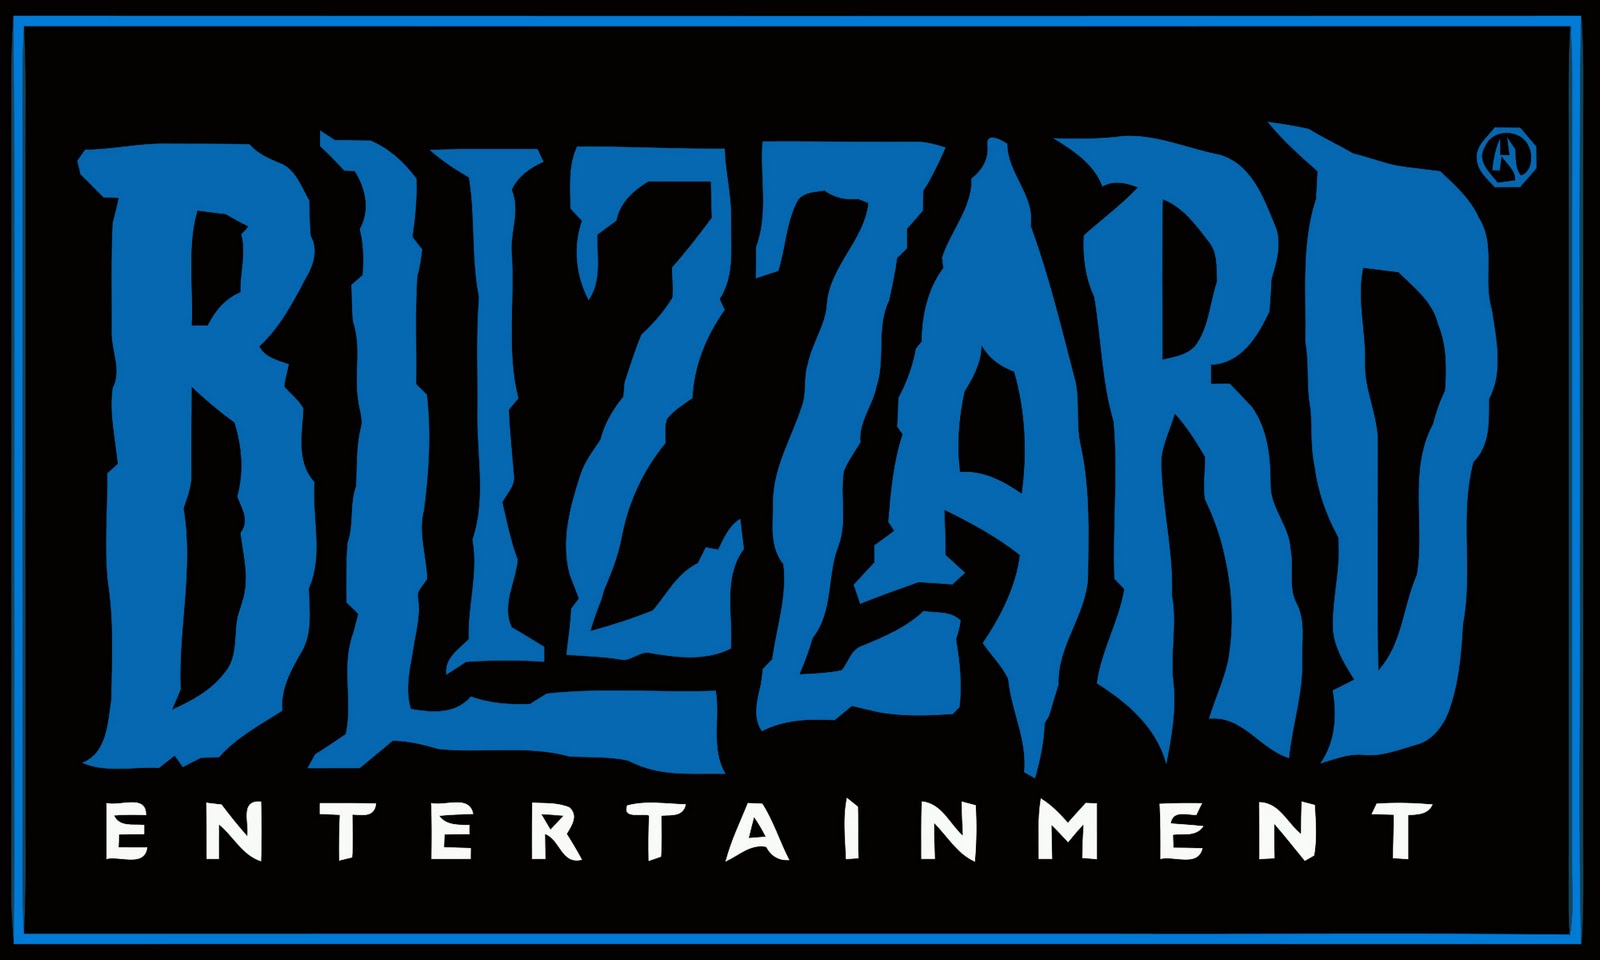 Blizzard Entertainment Logo HD Wallpaper